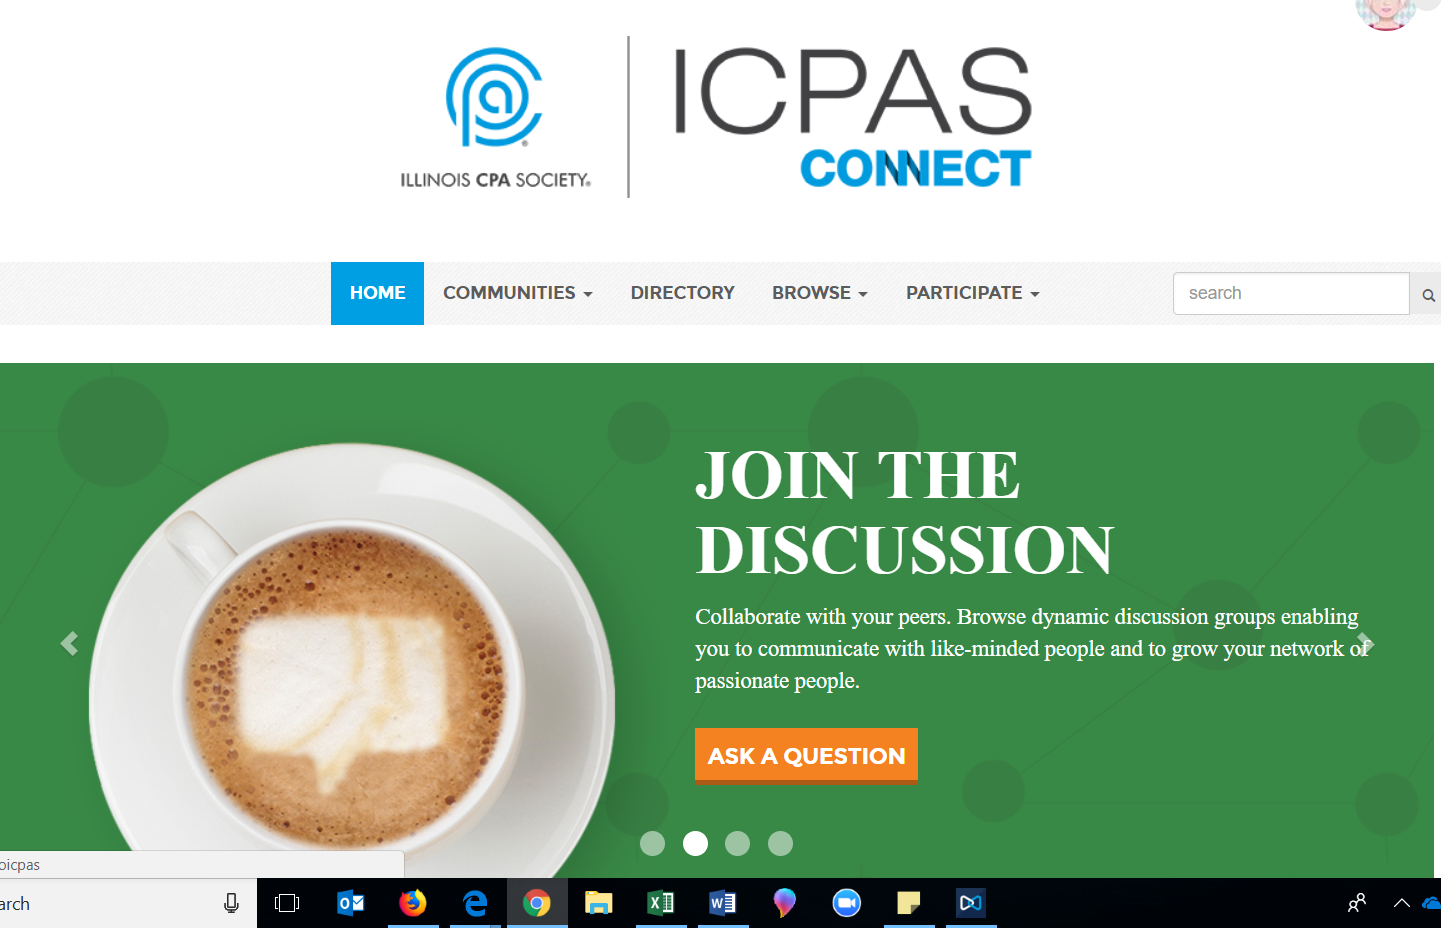 icpas connect image